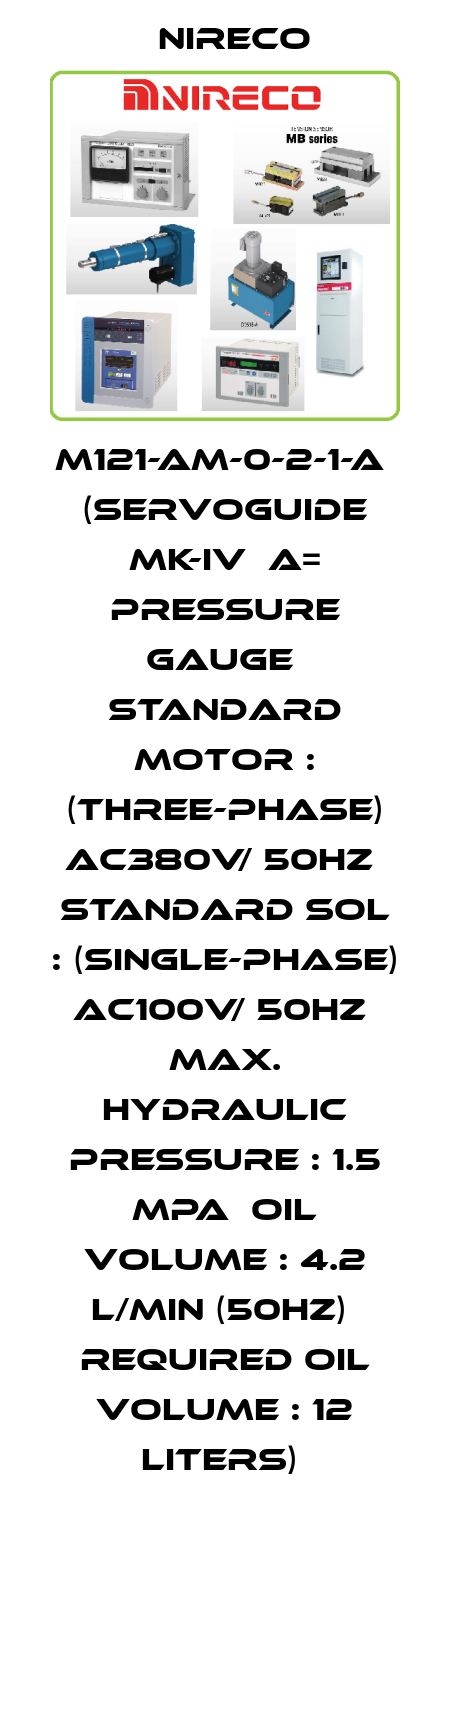 M121-AM-0-2-1-A  (Servoguide MK-IV  A= Pressure Gauge  Standard Motor : (Three-phase) AC380V/ 50Hz  Standard SOL : (Single-phase) AC100V/ 50Hz  Max. hydraulic pressure : 1.5 MPa  Oil volume : 4.2 L/min (50Hz)  Required oil volume : 12 liters)  Nireco